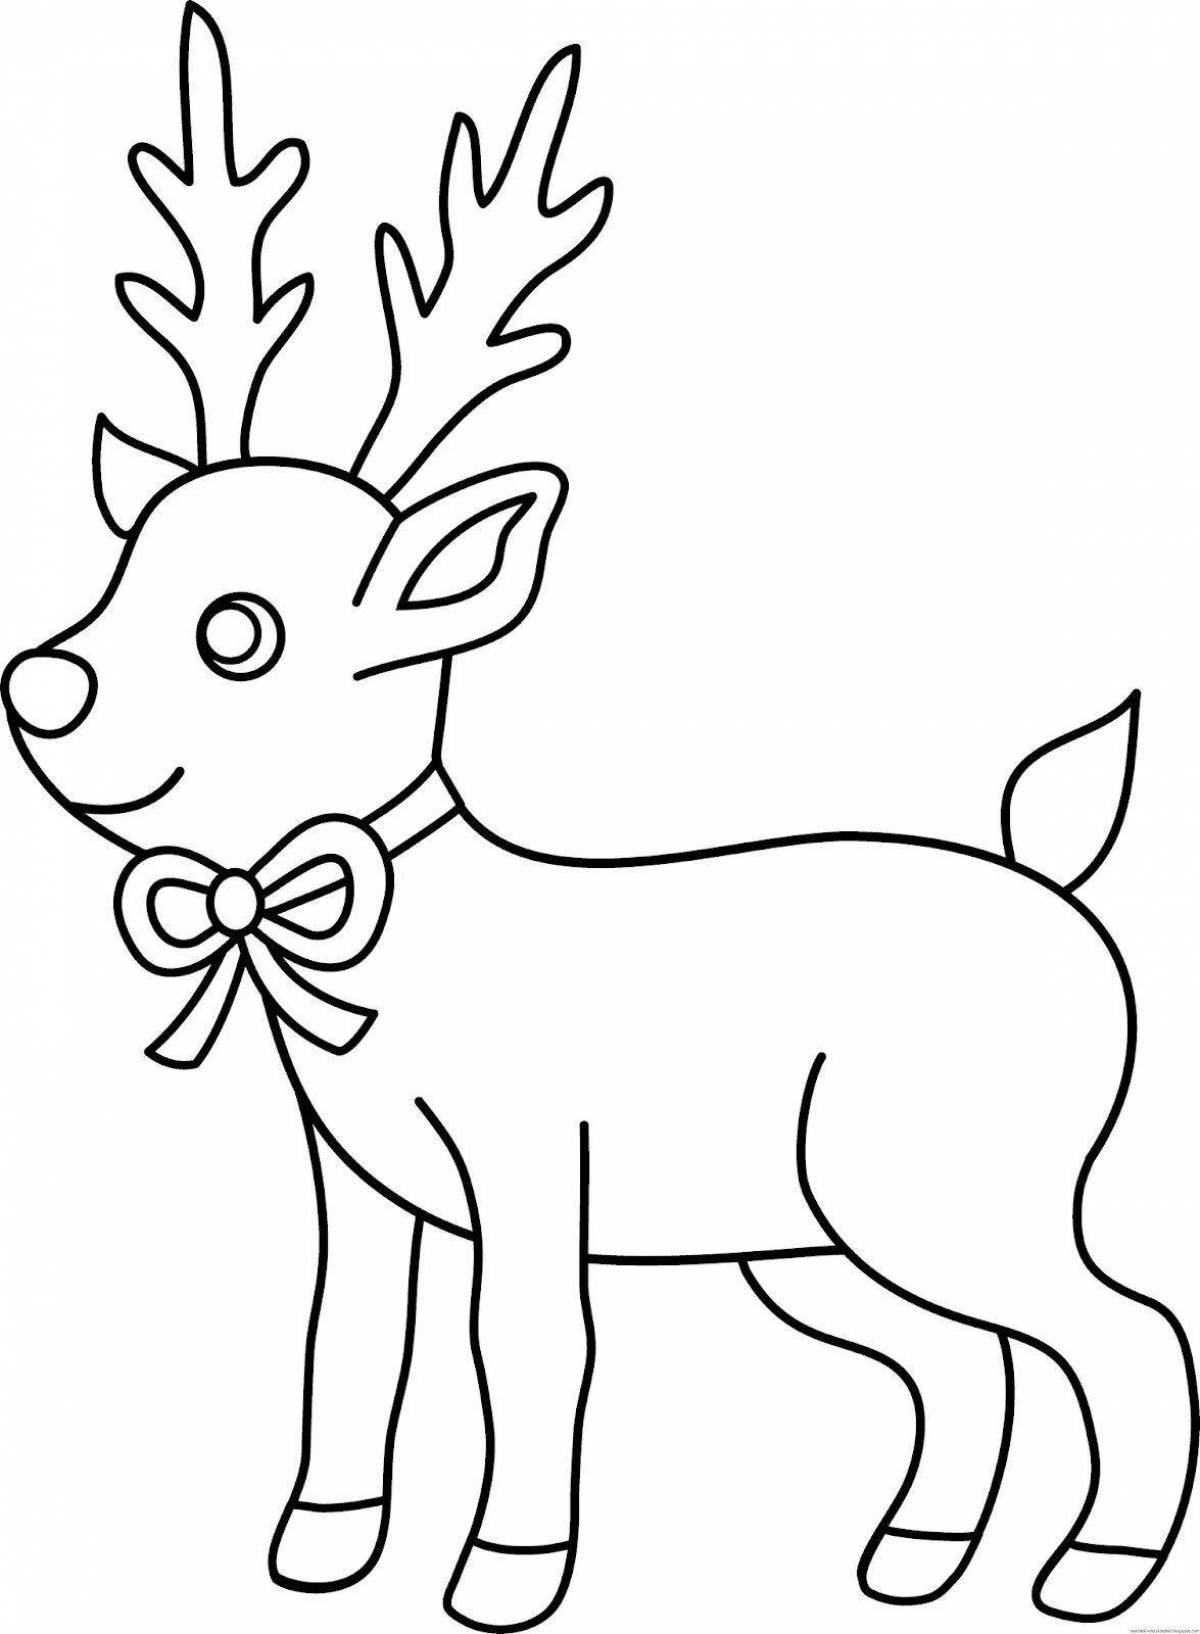 Creative deer coloring for kids